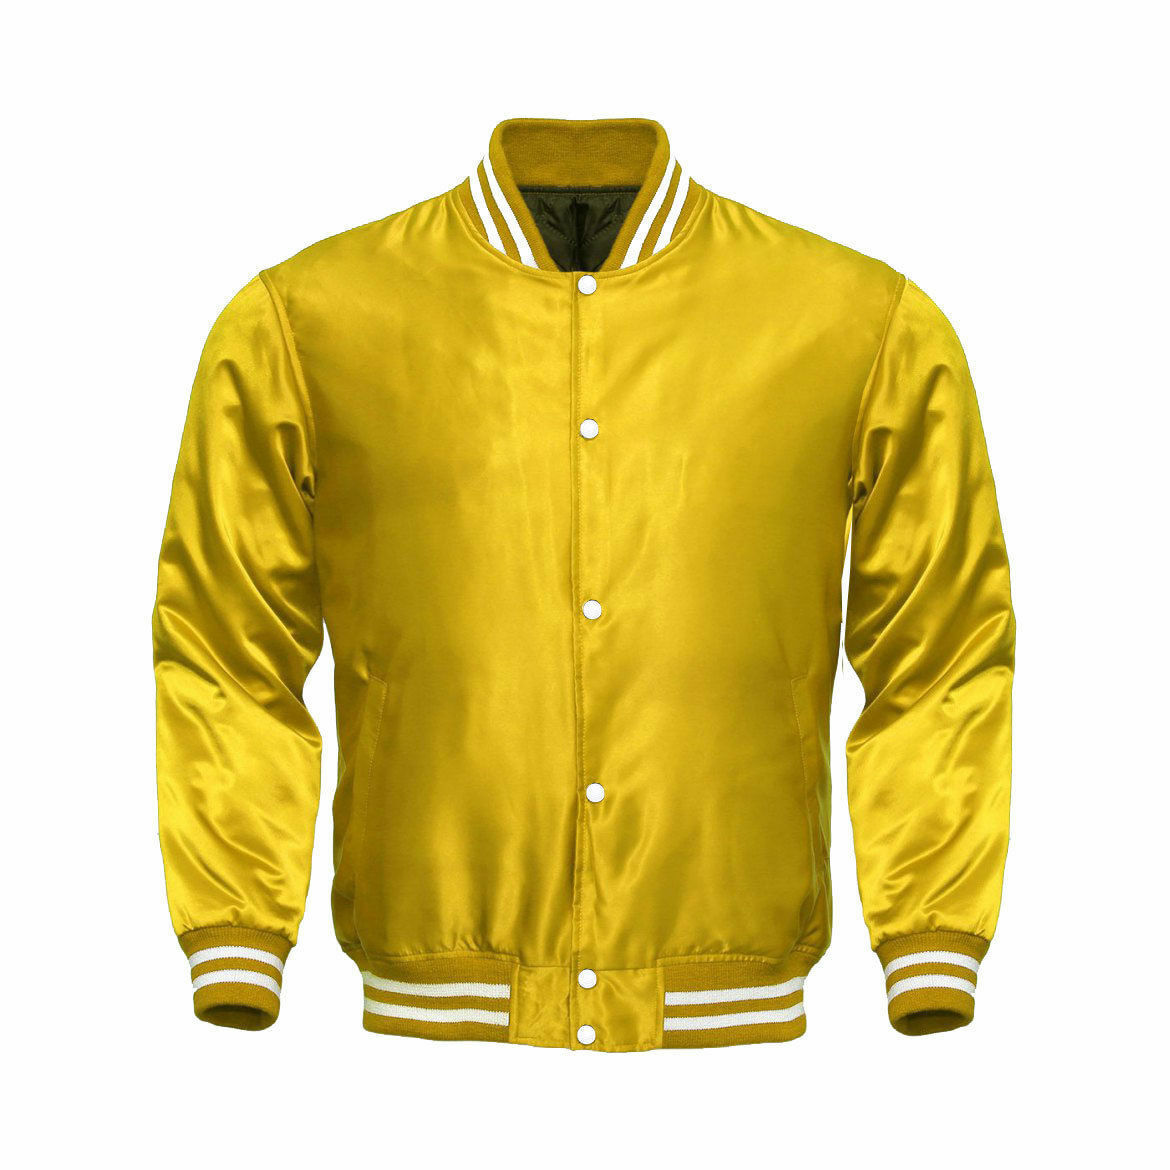 Spine Spark Yellow Satin Varsity Jacket With White Rib